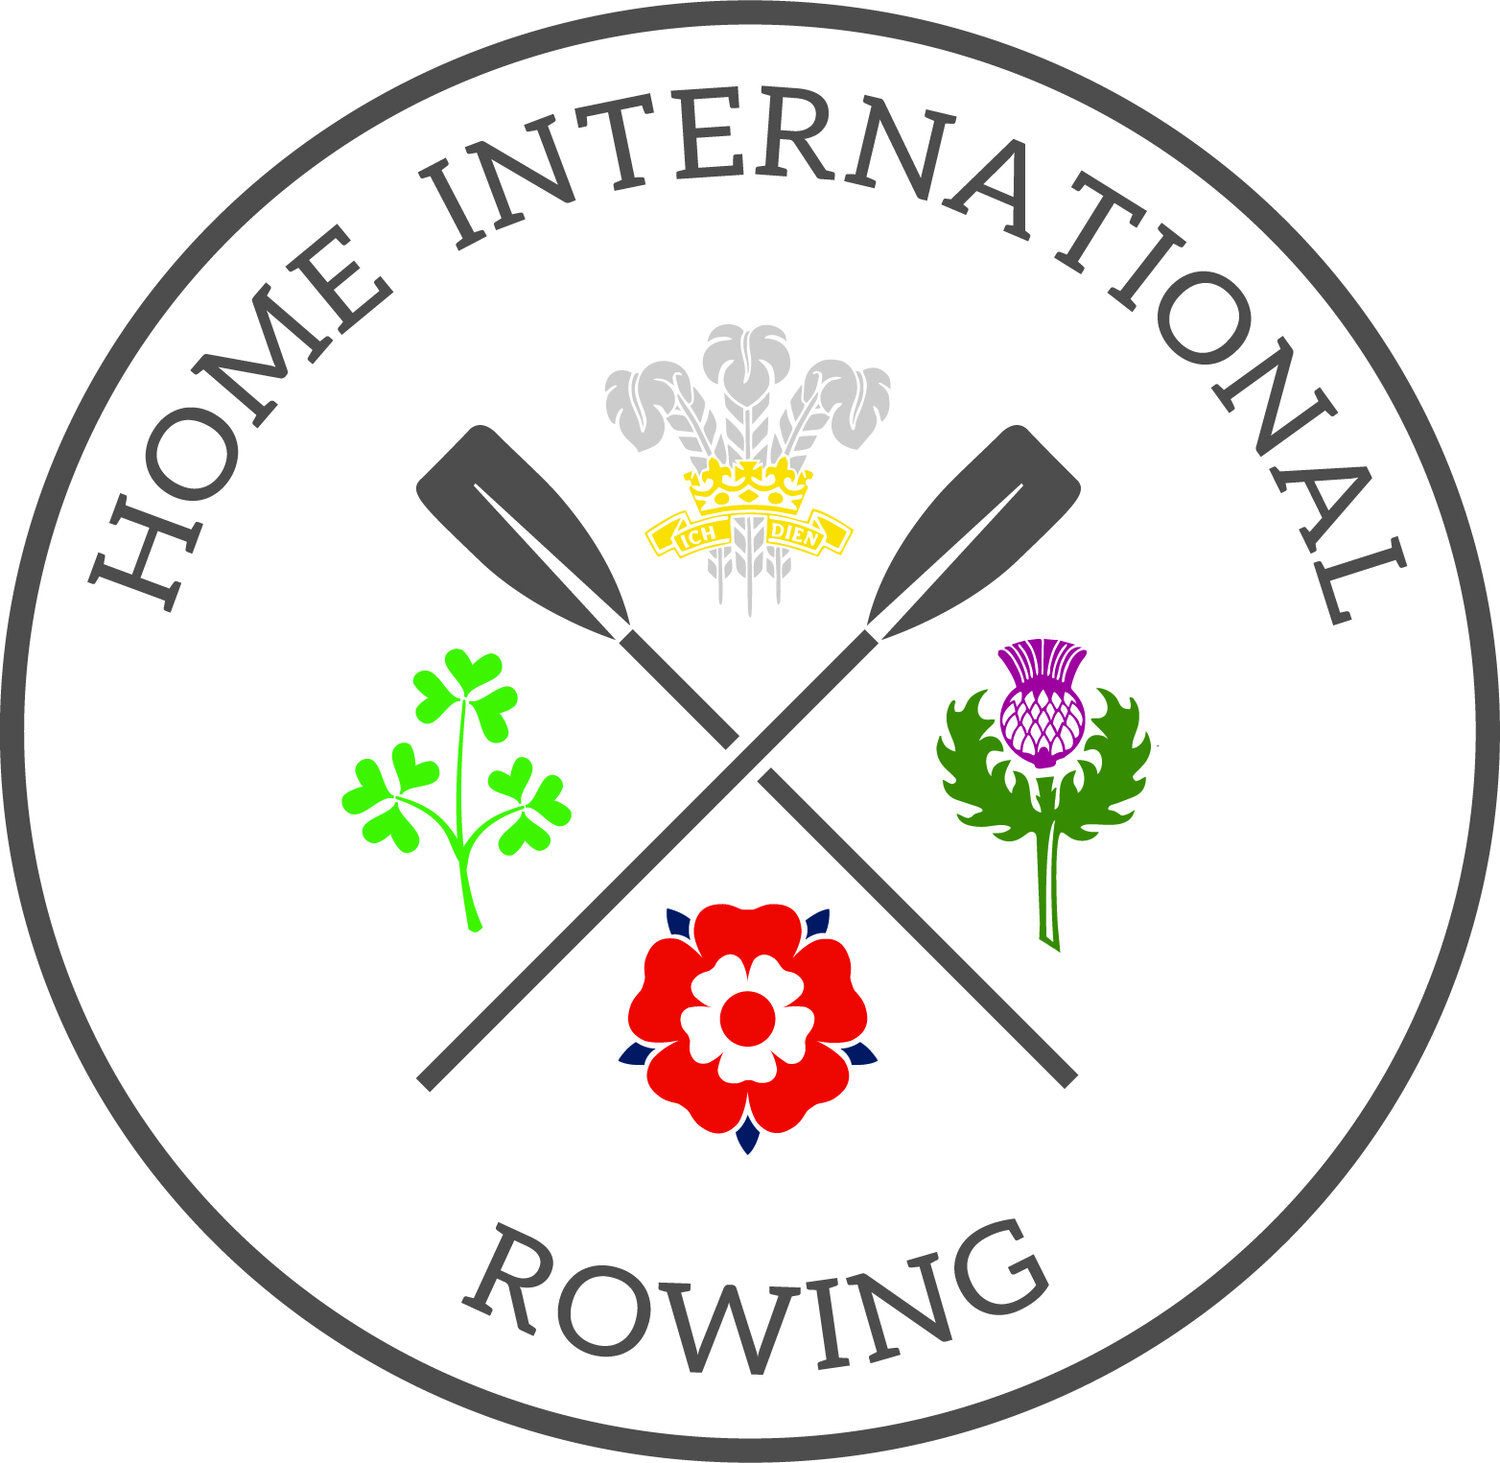 Home International Rowing